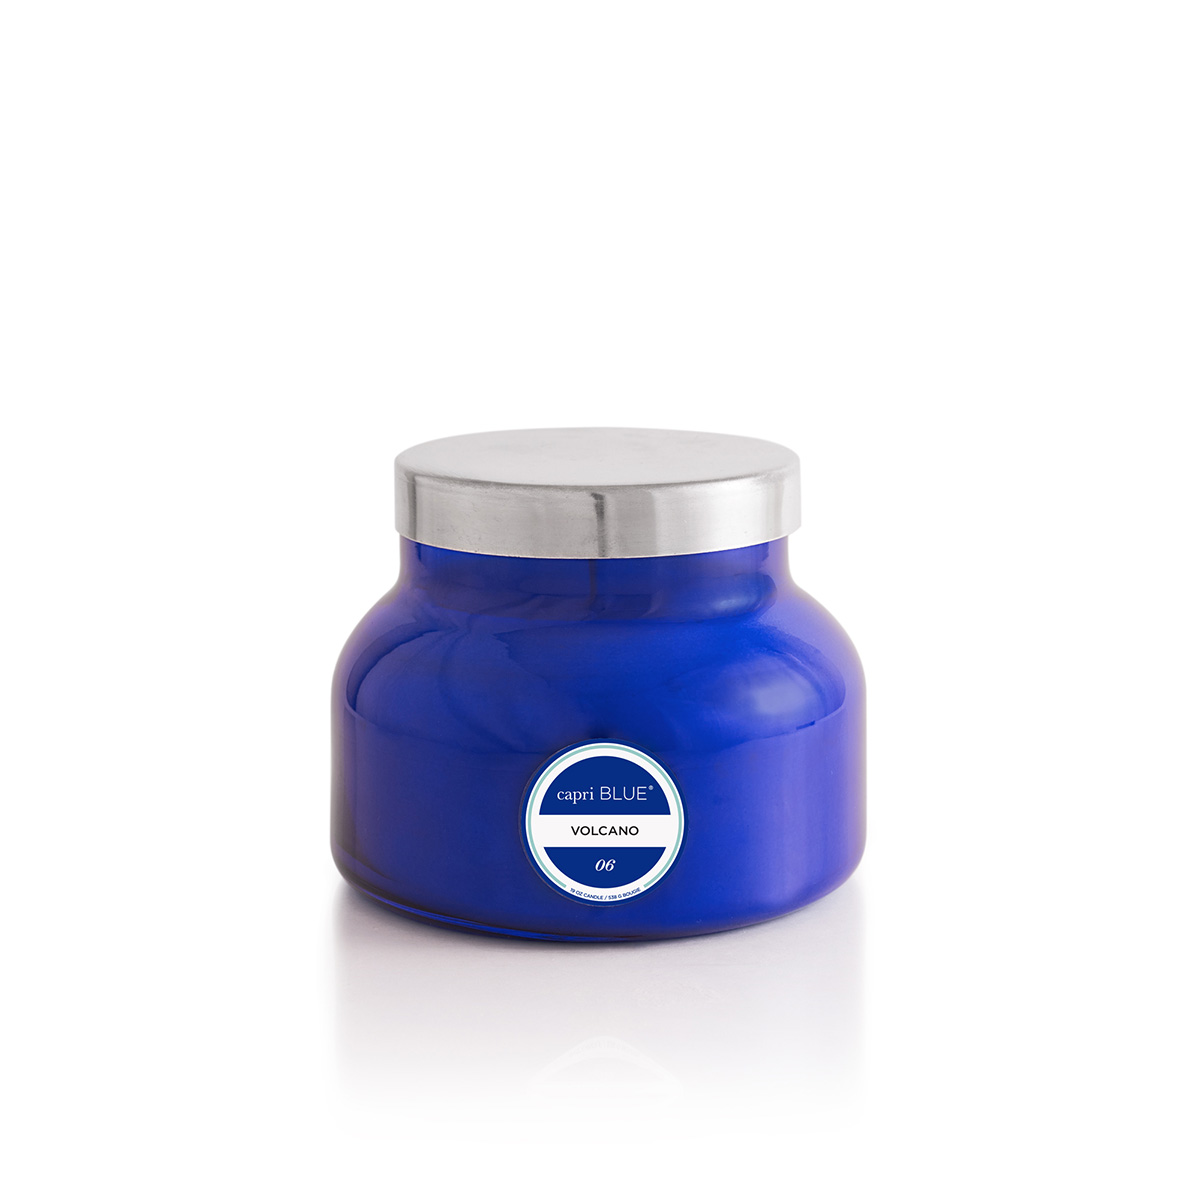 Capri Blue Reed Oil Diffuser - Volcano - Comes with Diffuser Sticks, Oil,  and Glass Bottle - Aromatherapy Diffuser - 8 Fl Oz - White